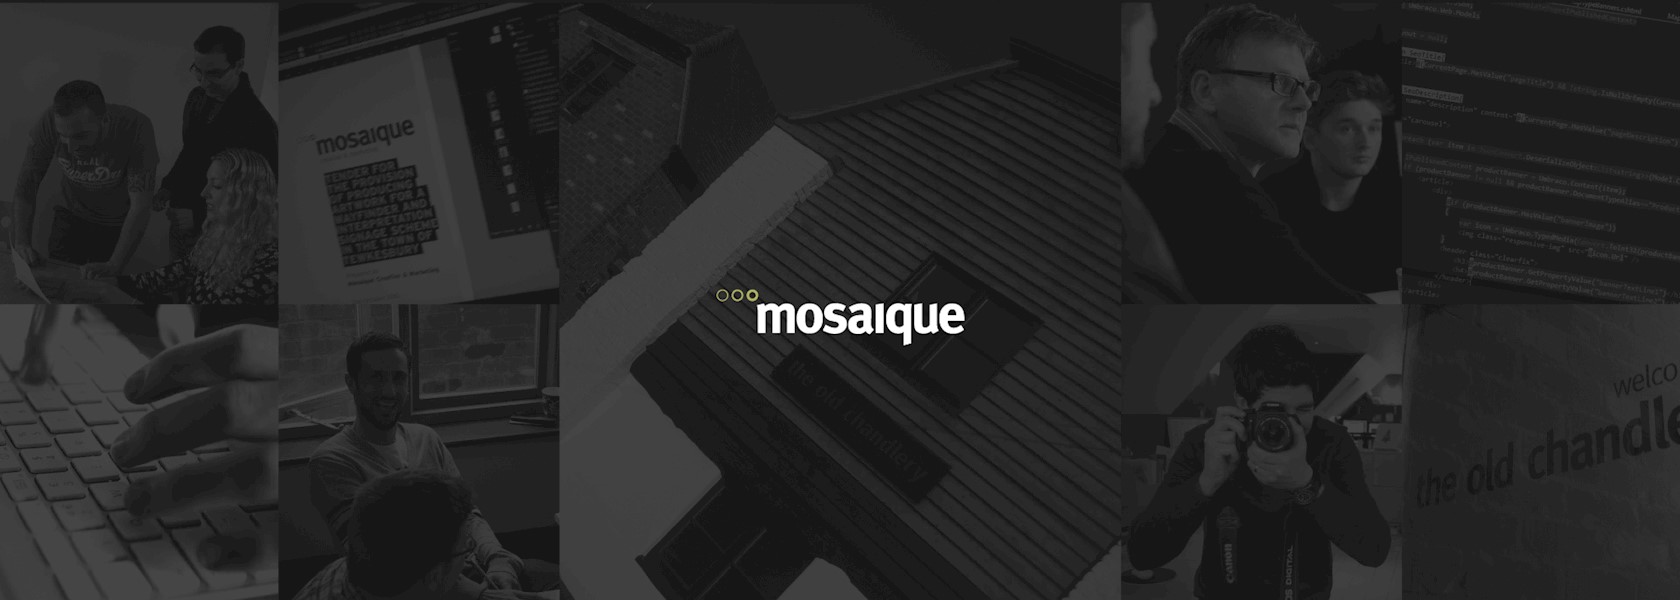 Mosaique Creative & Marketing